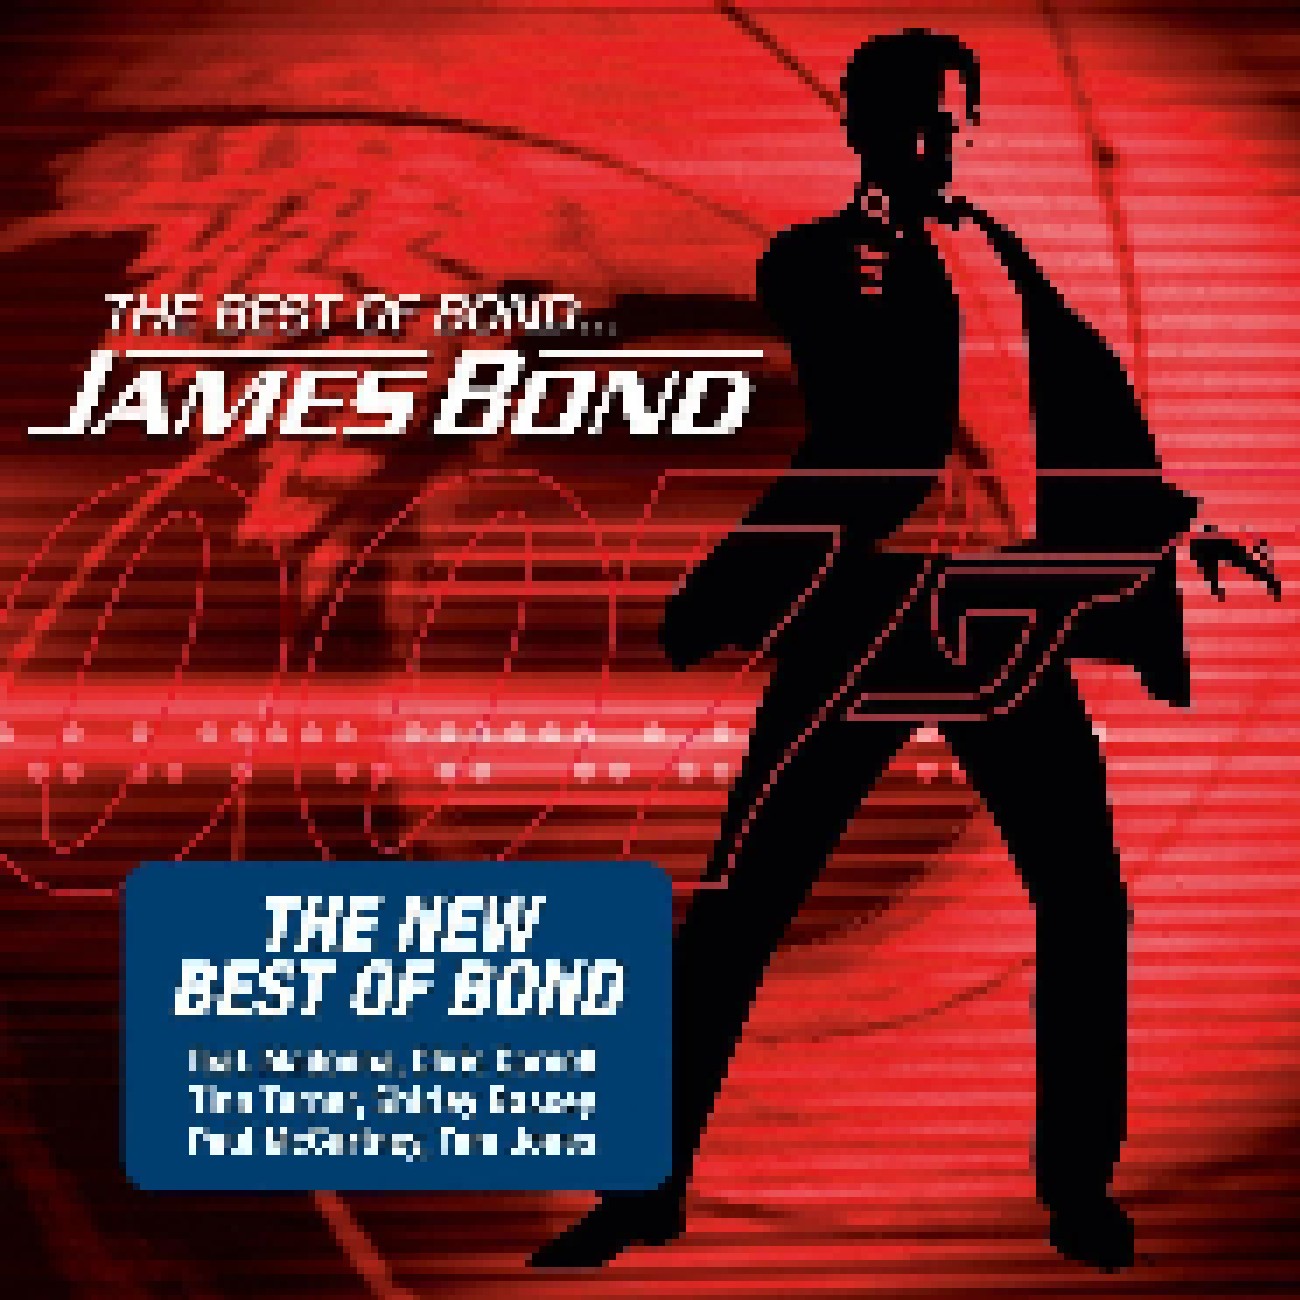 The Best Of Bondjames Bond Cd Dvd 2008 Pappschuber